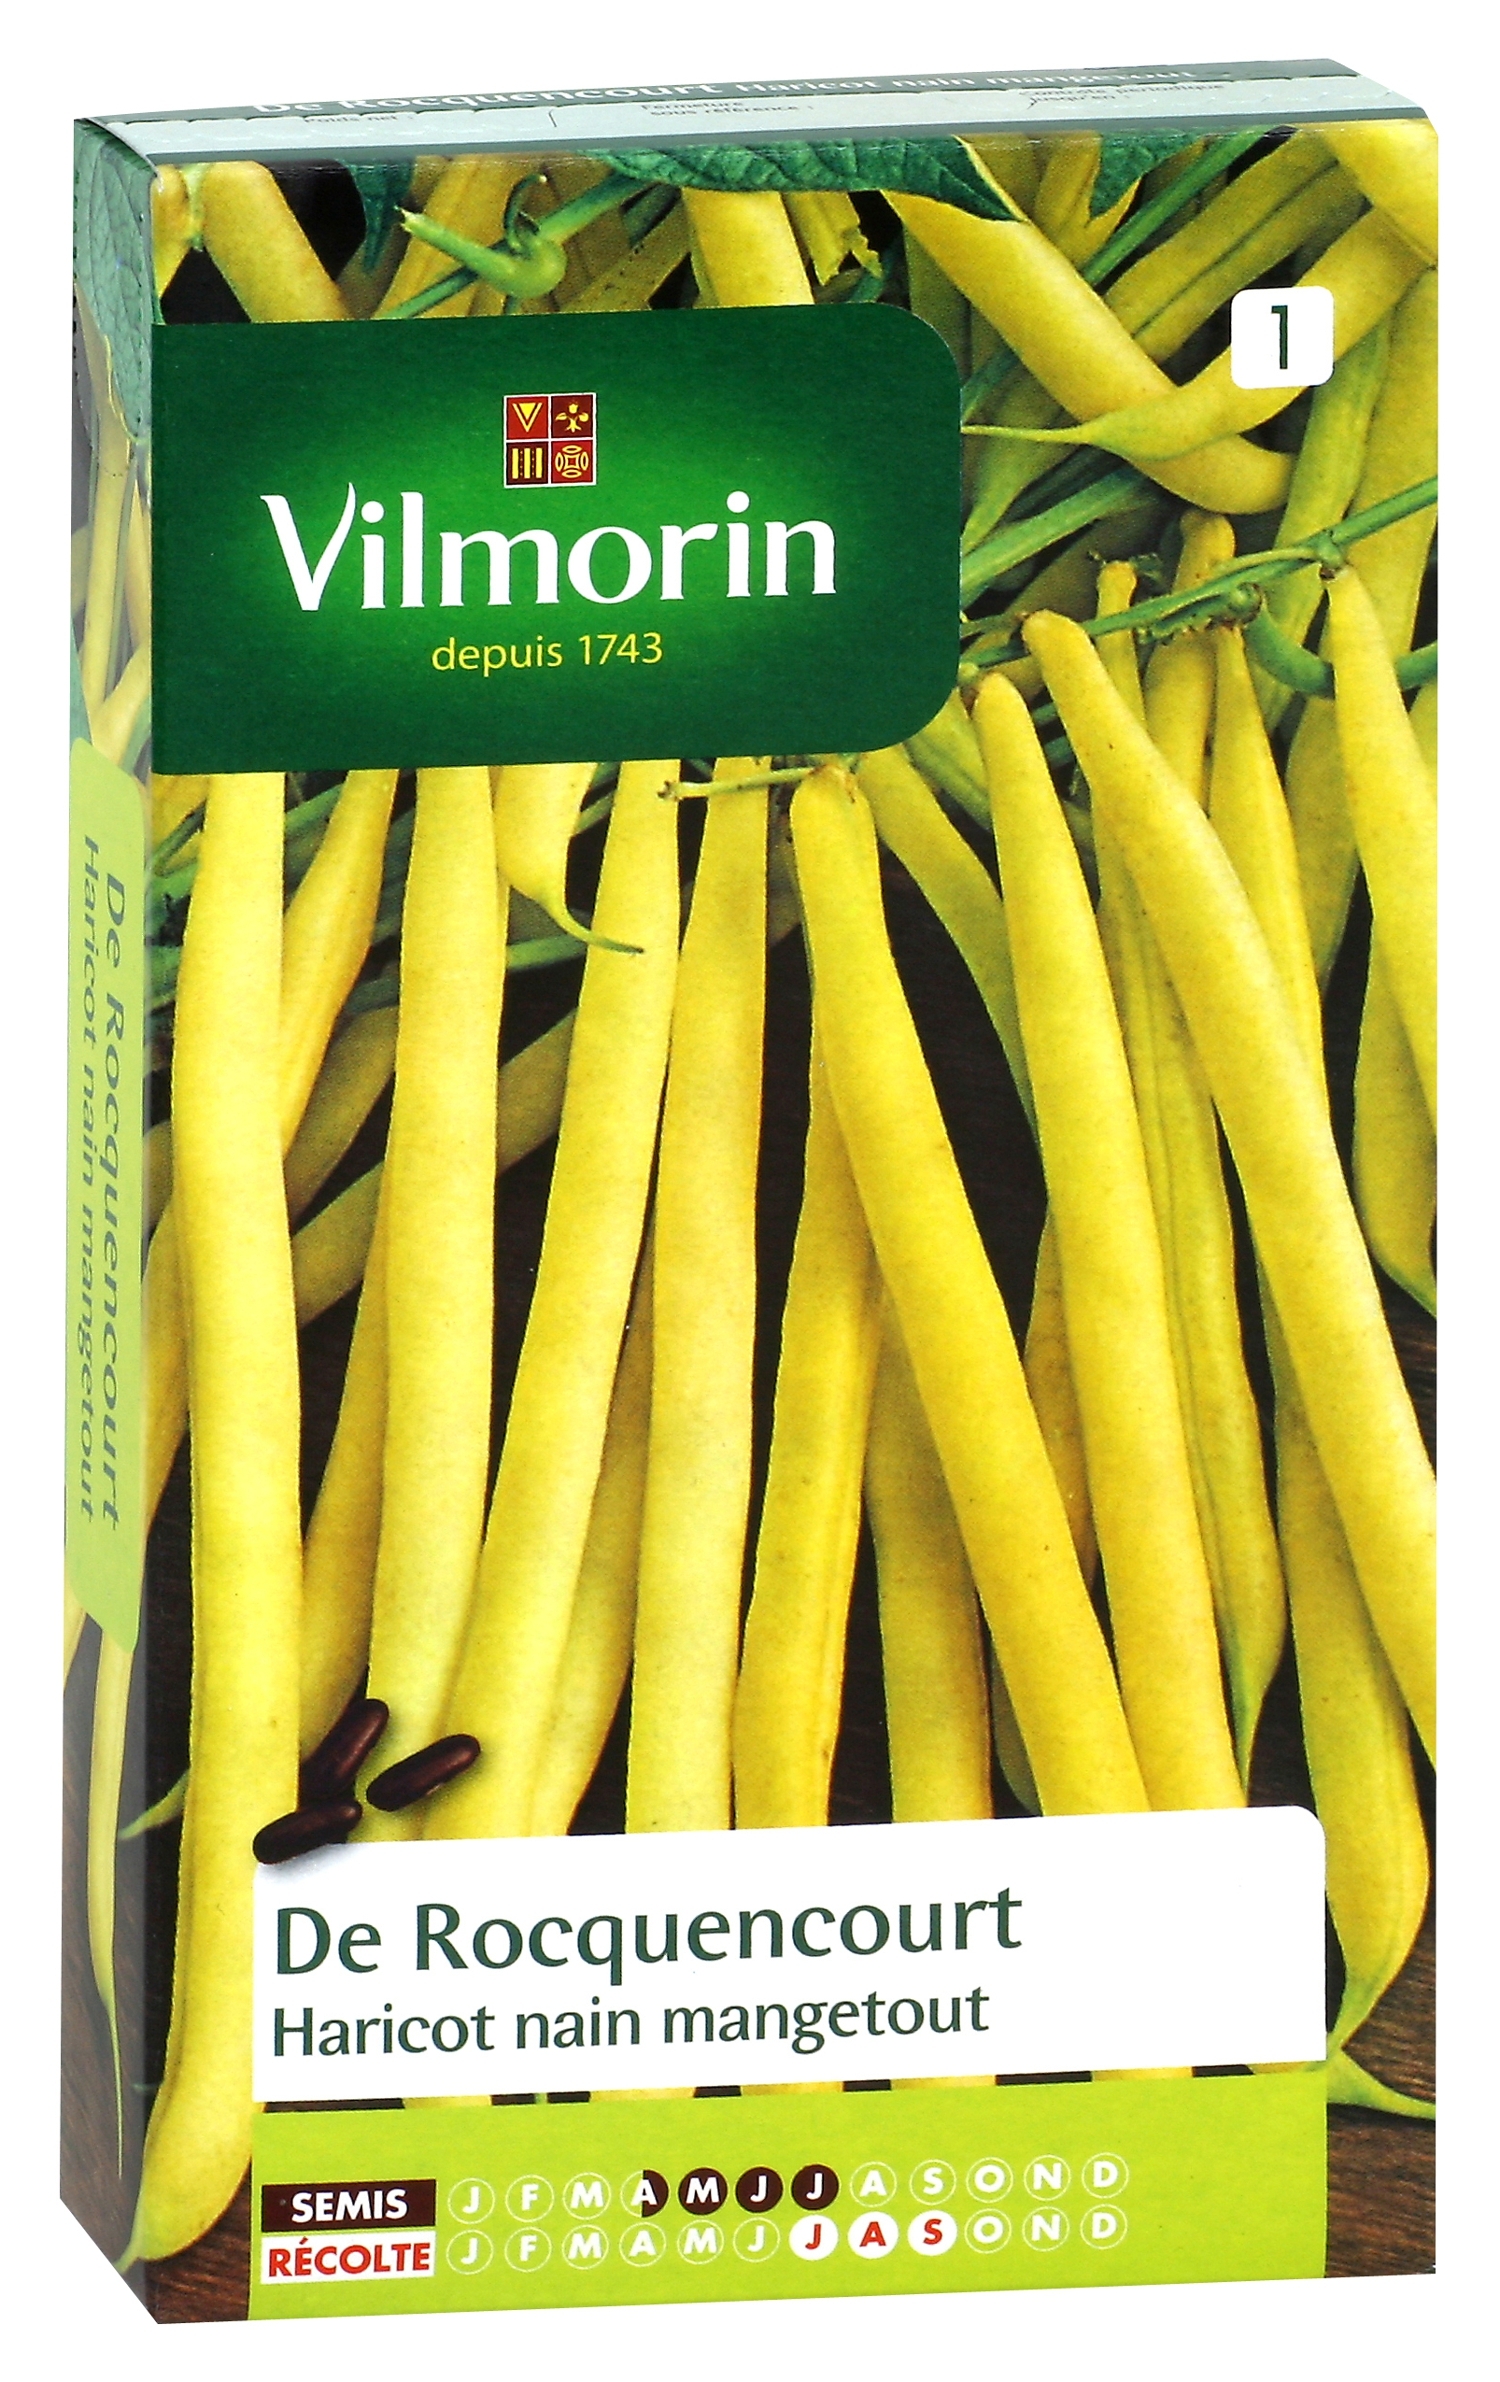 Haricot nain mangetout Beurre de Rocquencourt - Vilmorin